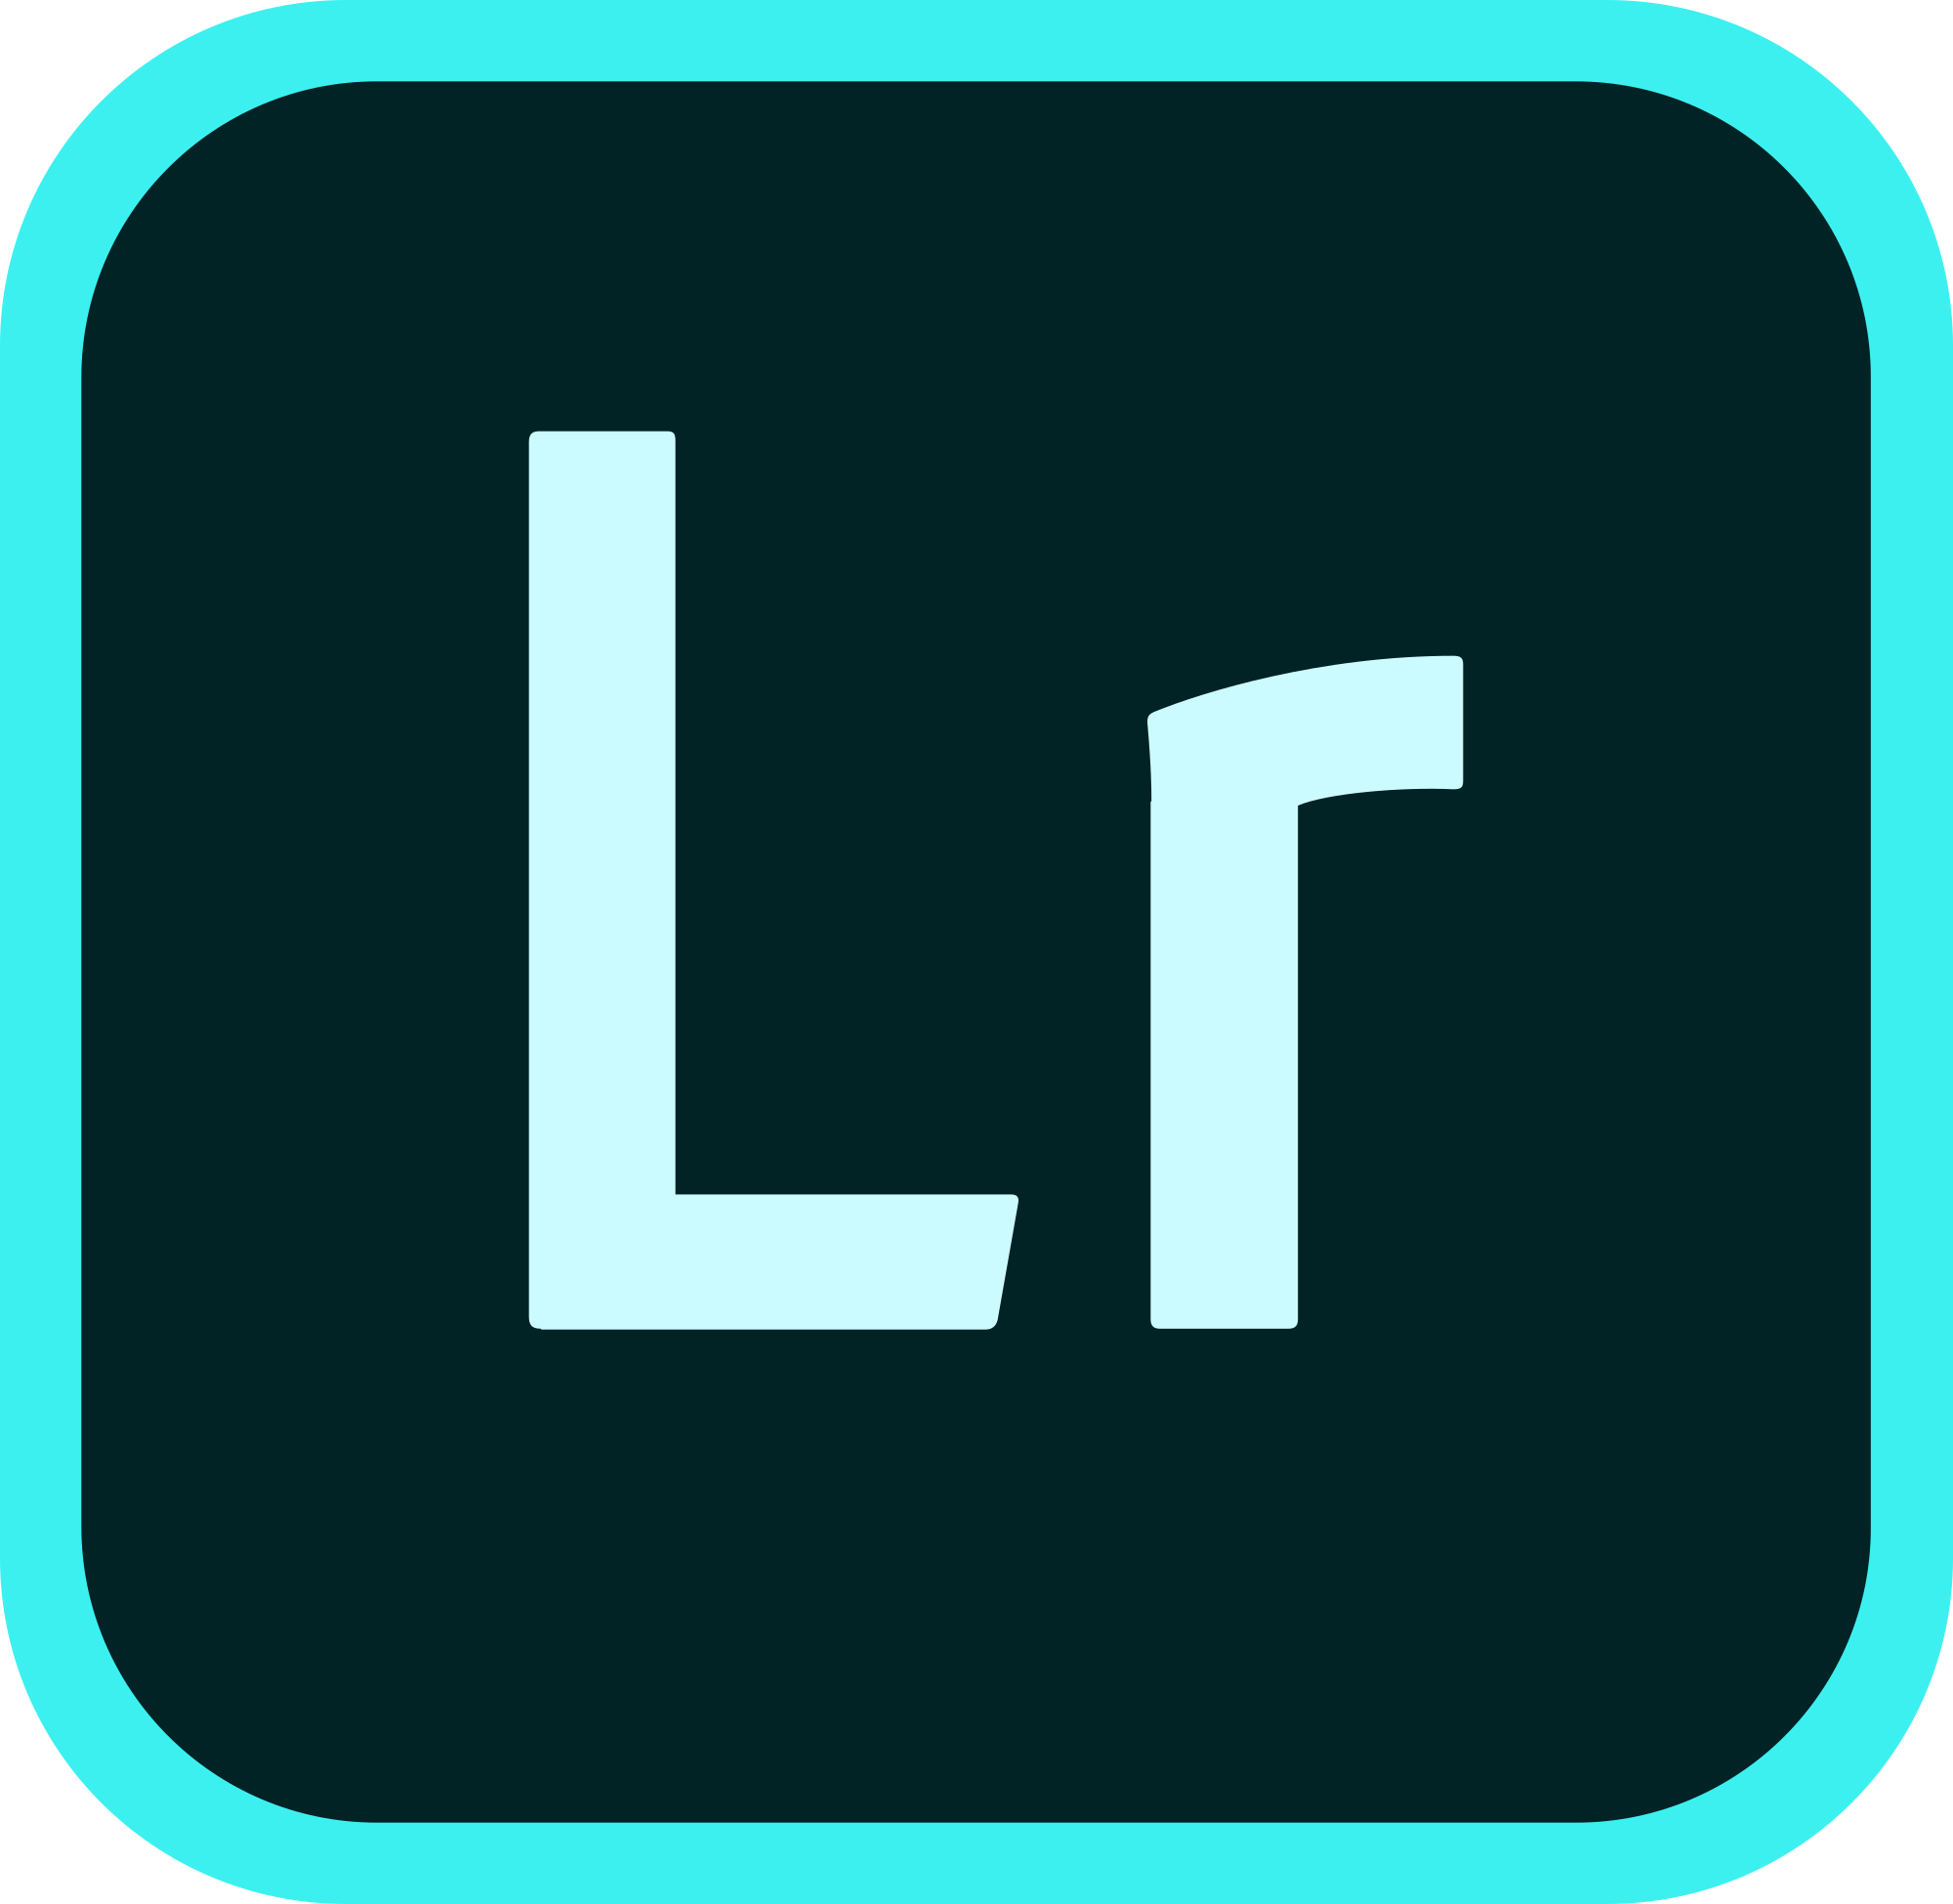 Lightroom Logo - File:Adobe Photoshop Lightroom CC logo.svg - Wikimedia Commons